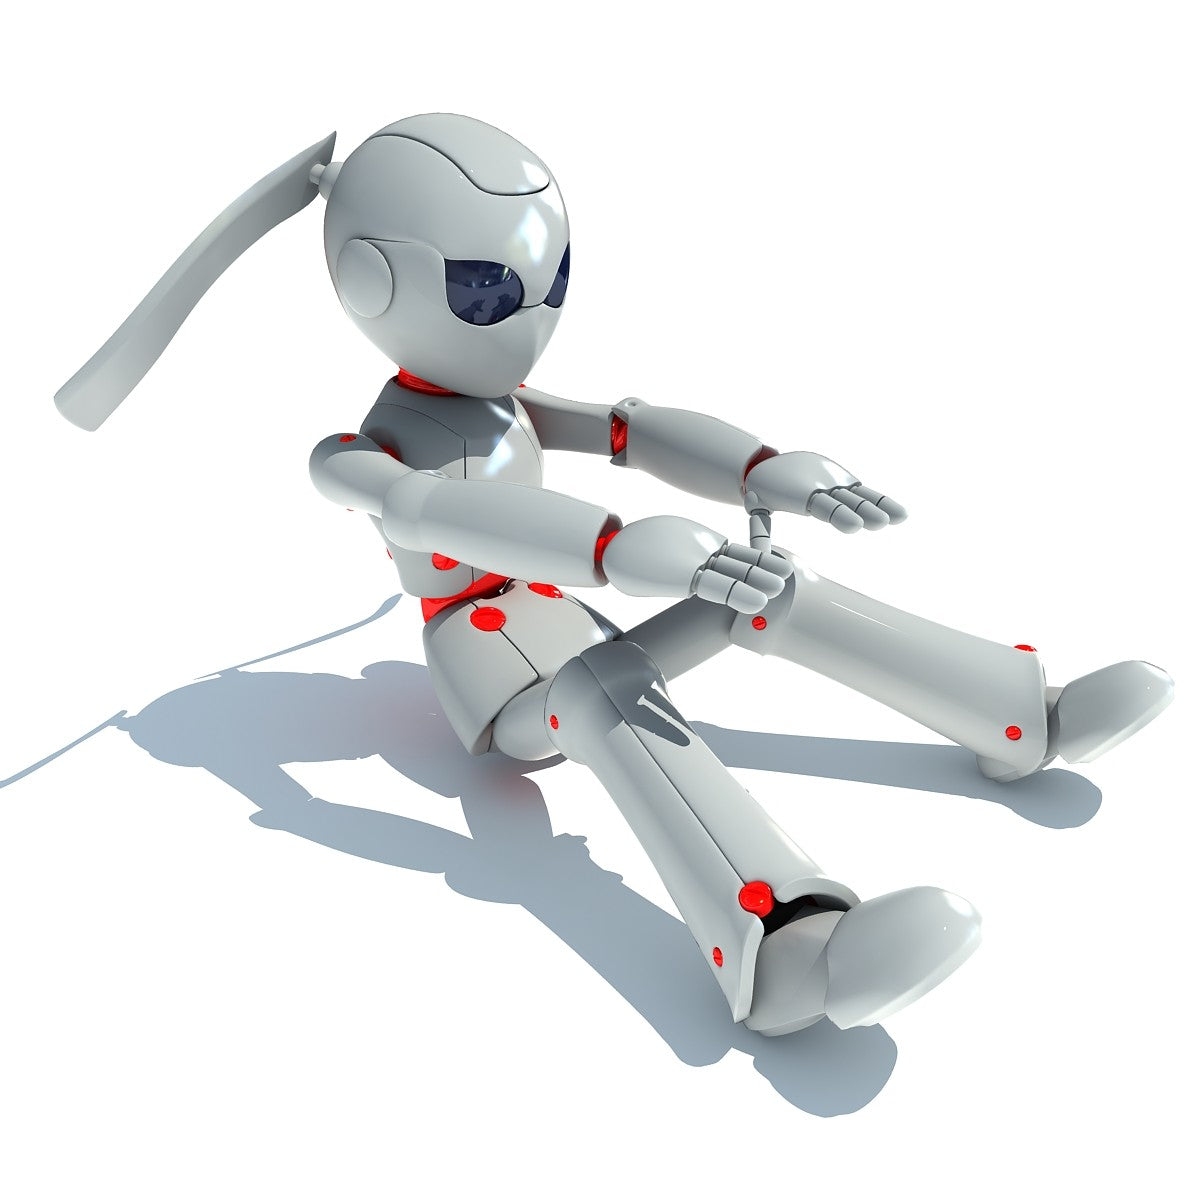 Rigged Robot 3D Model